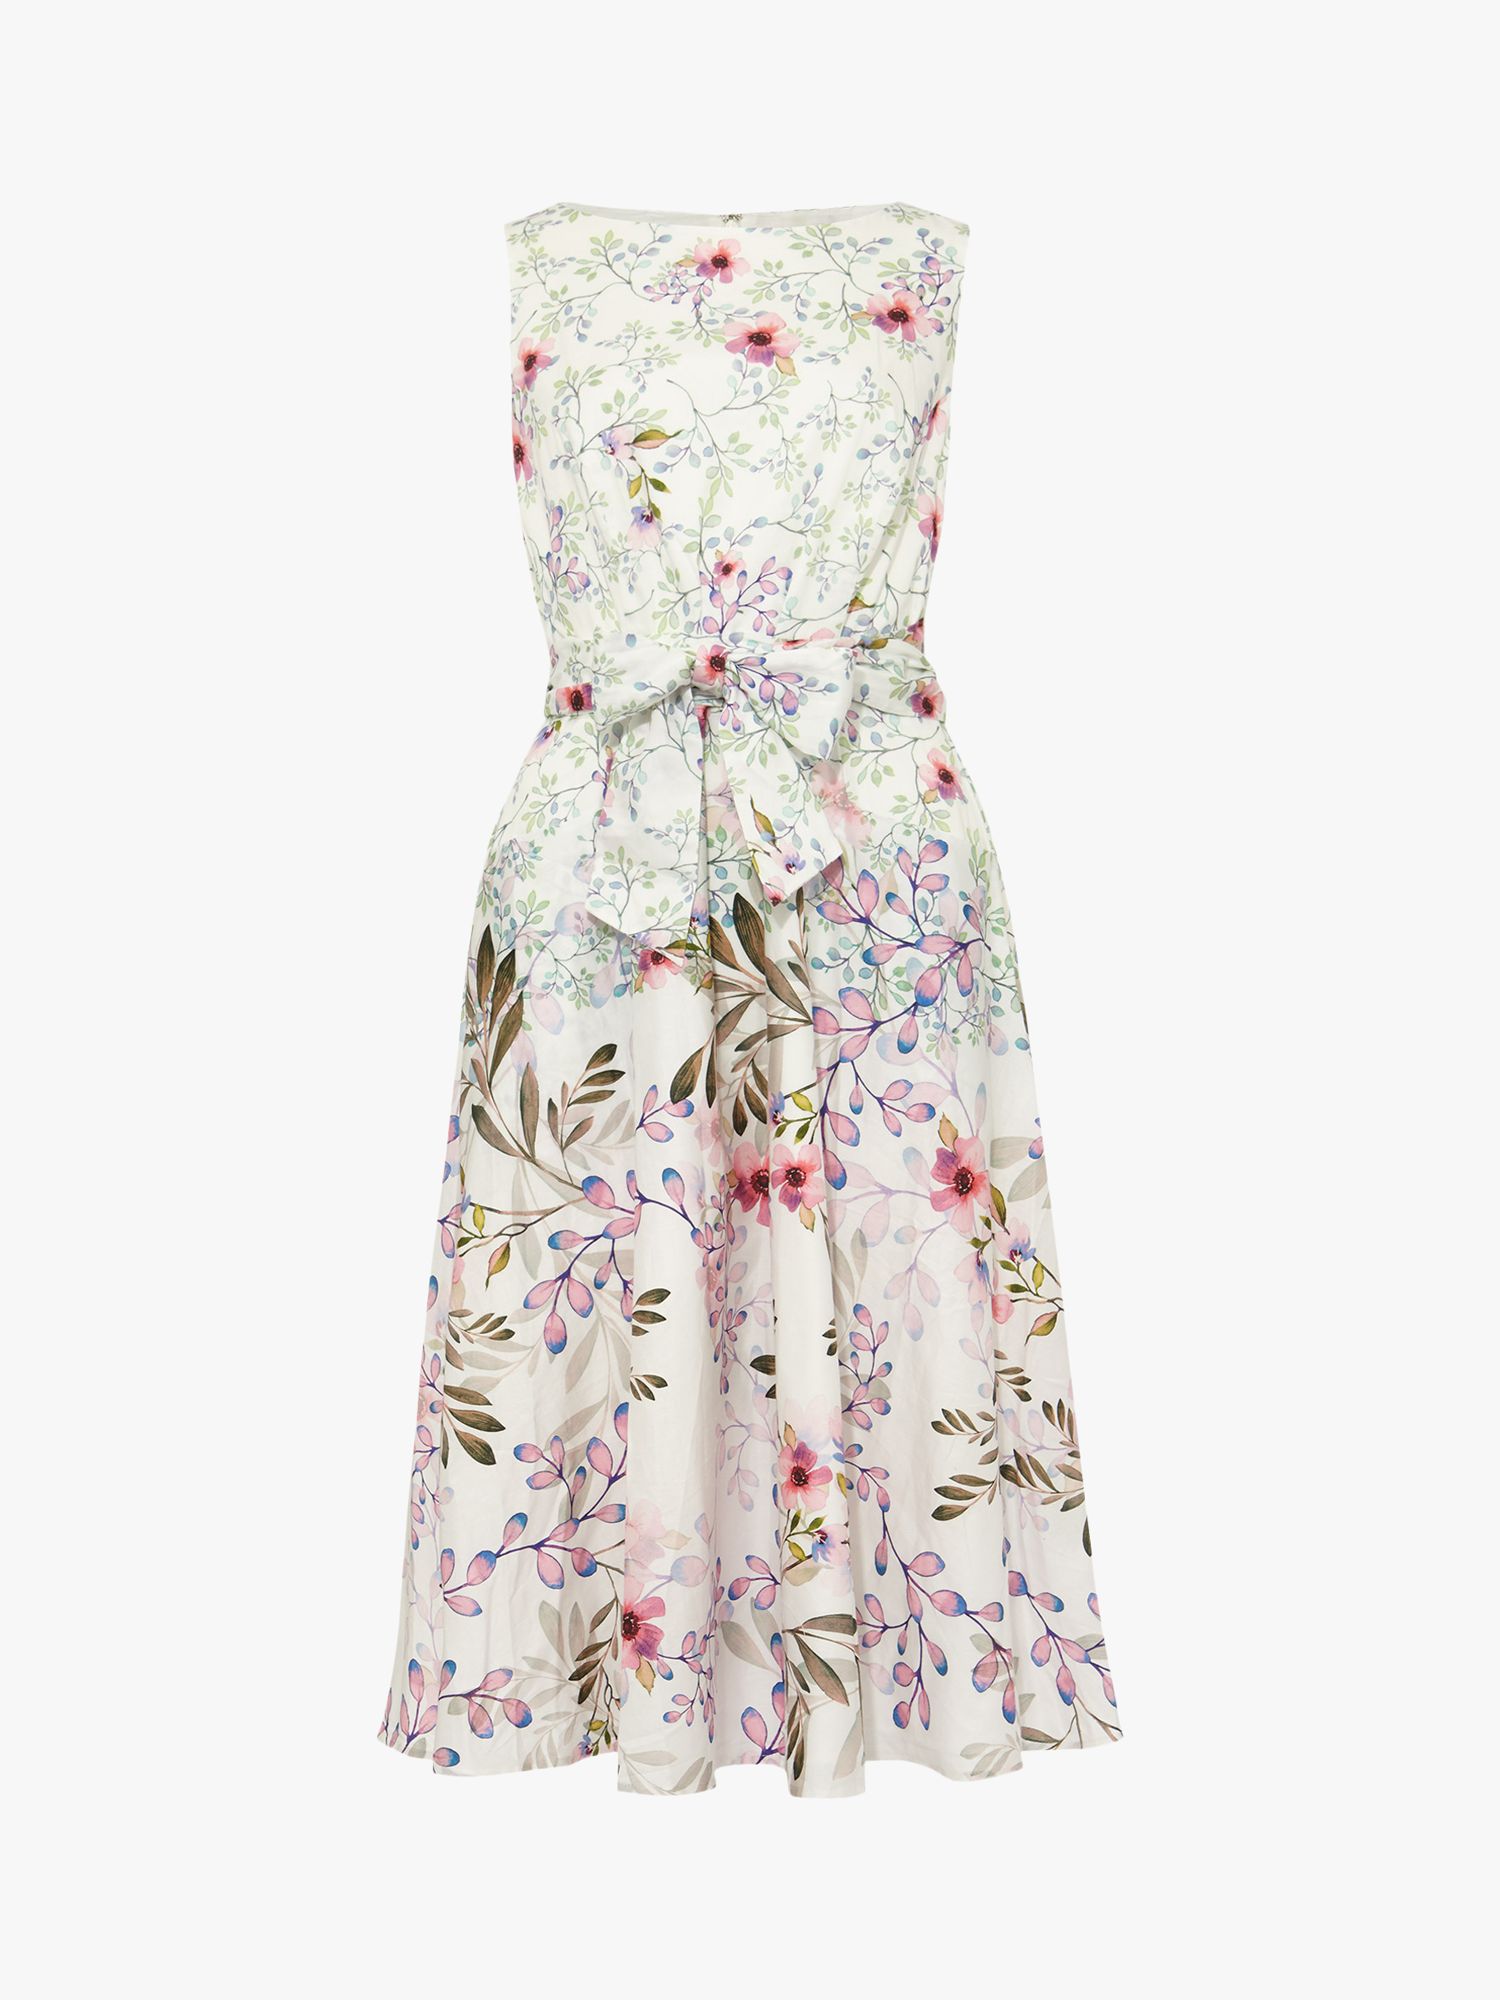 Phase Eight Wilhemina Floral Print Flared Dress, Ivory/Multi